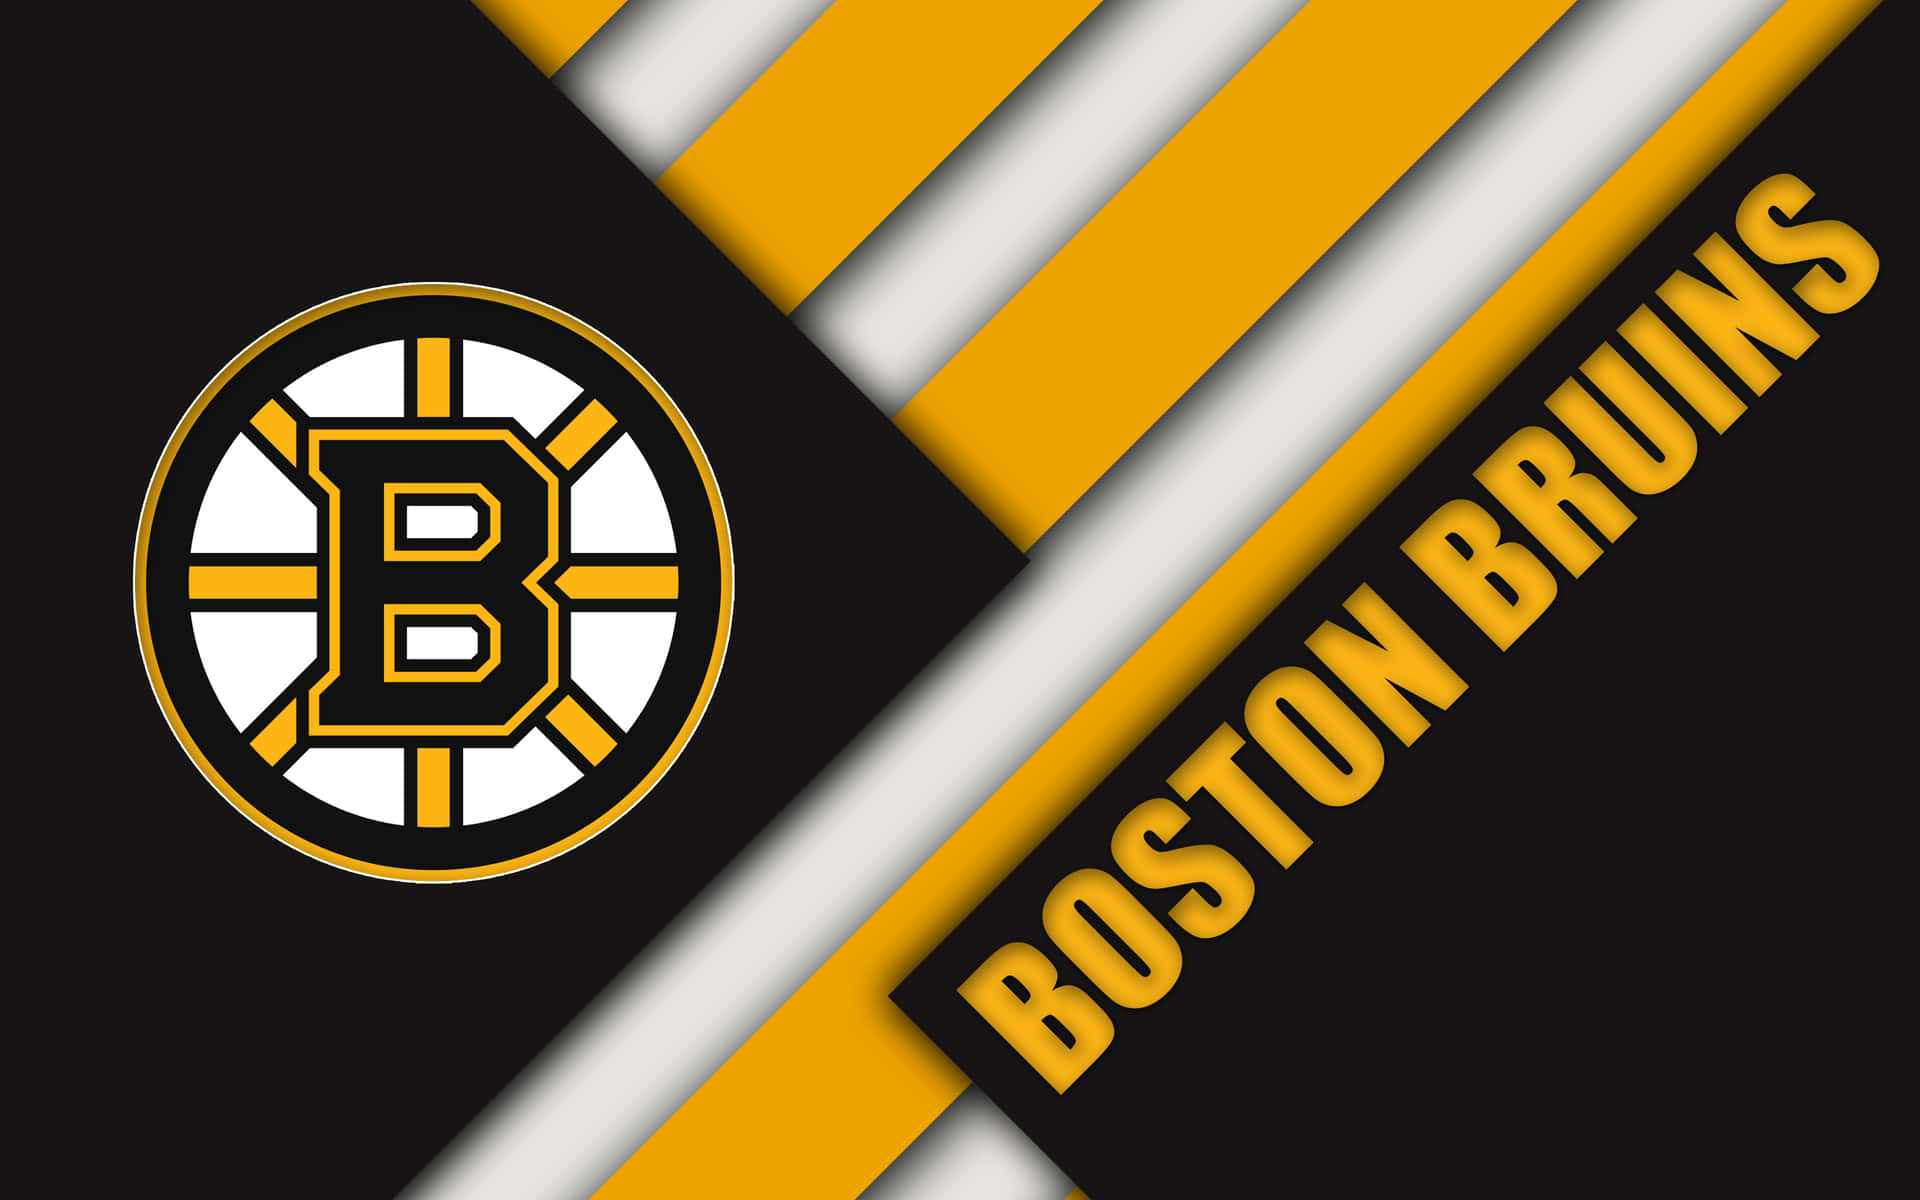 The Boston Bruins Champions Team